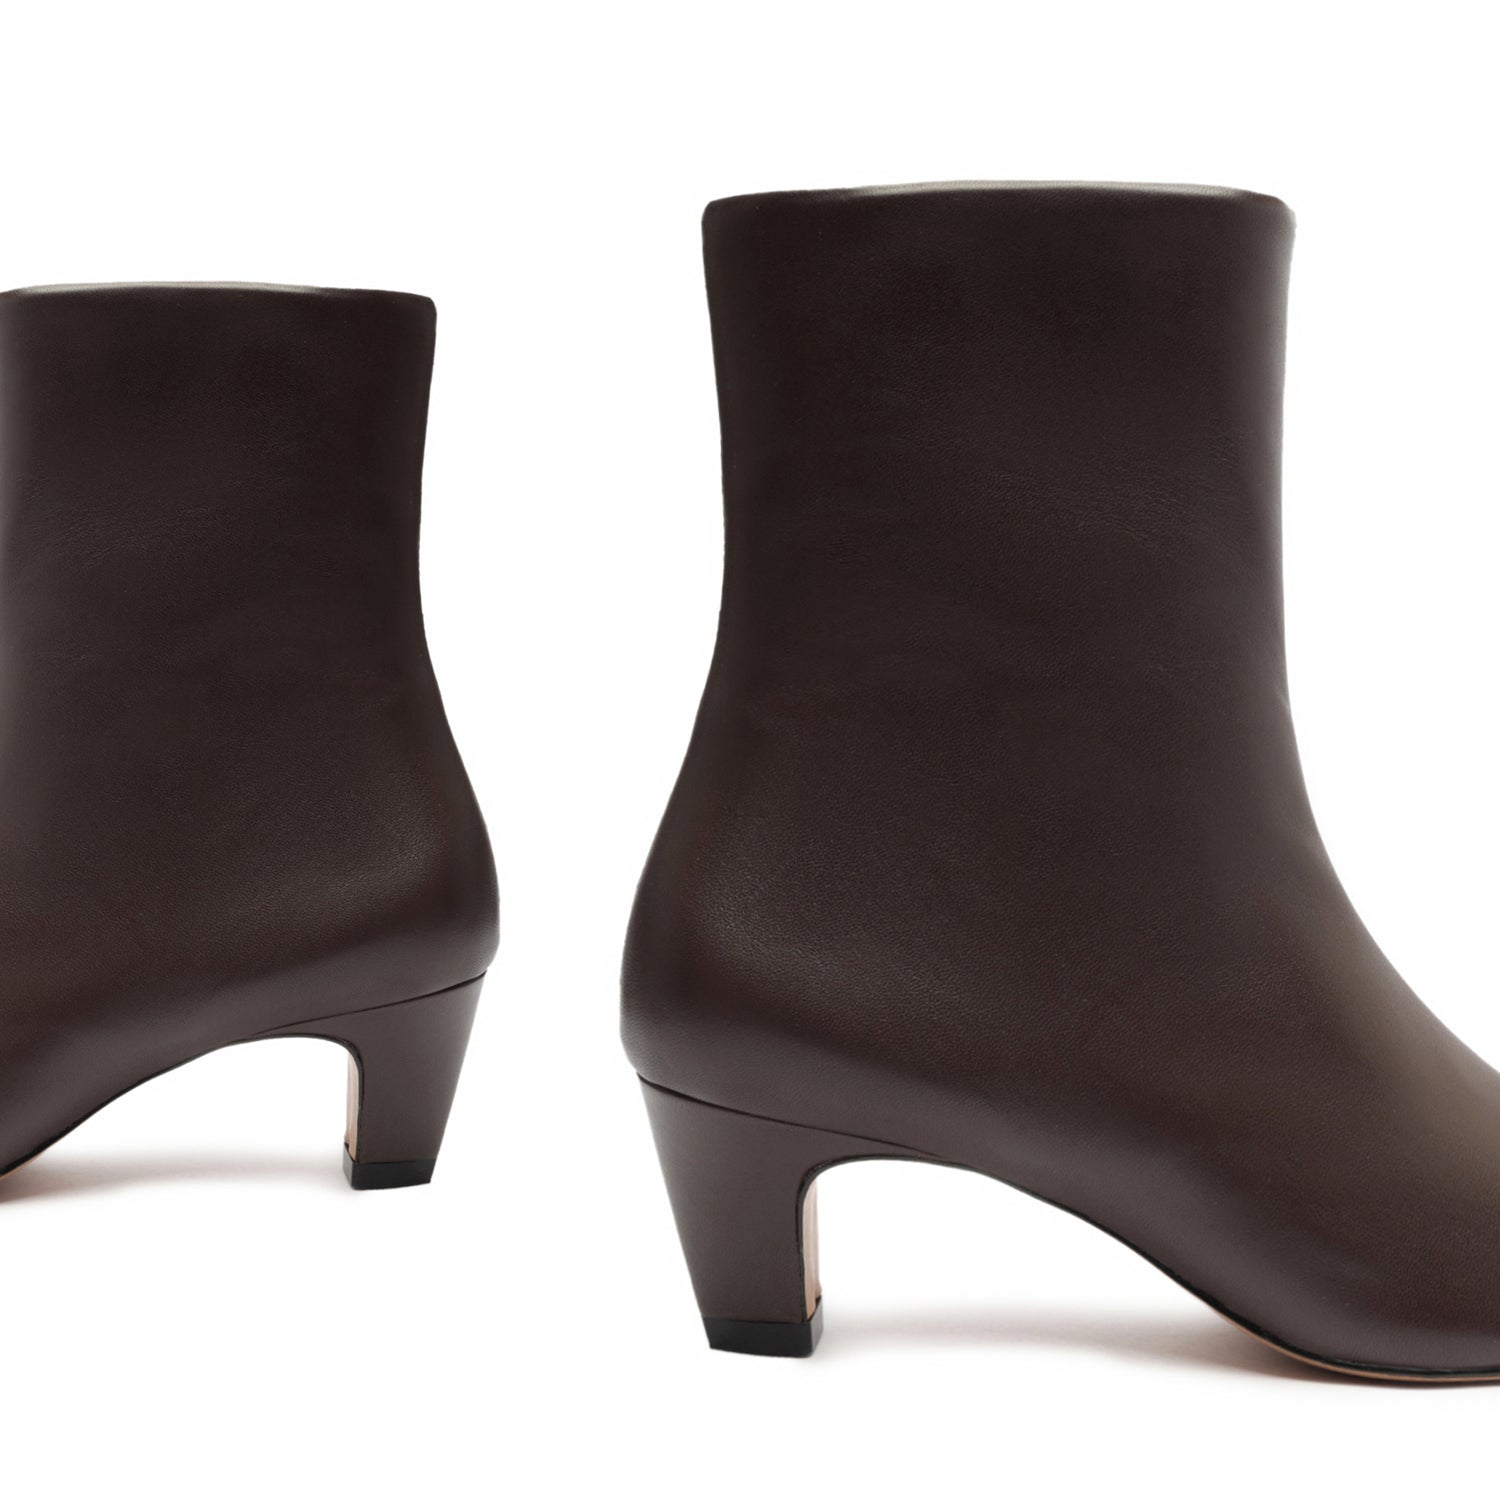 Dellia Nappa Leather Bootie Booties WINTER 23    - Schutz Shoes